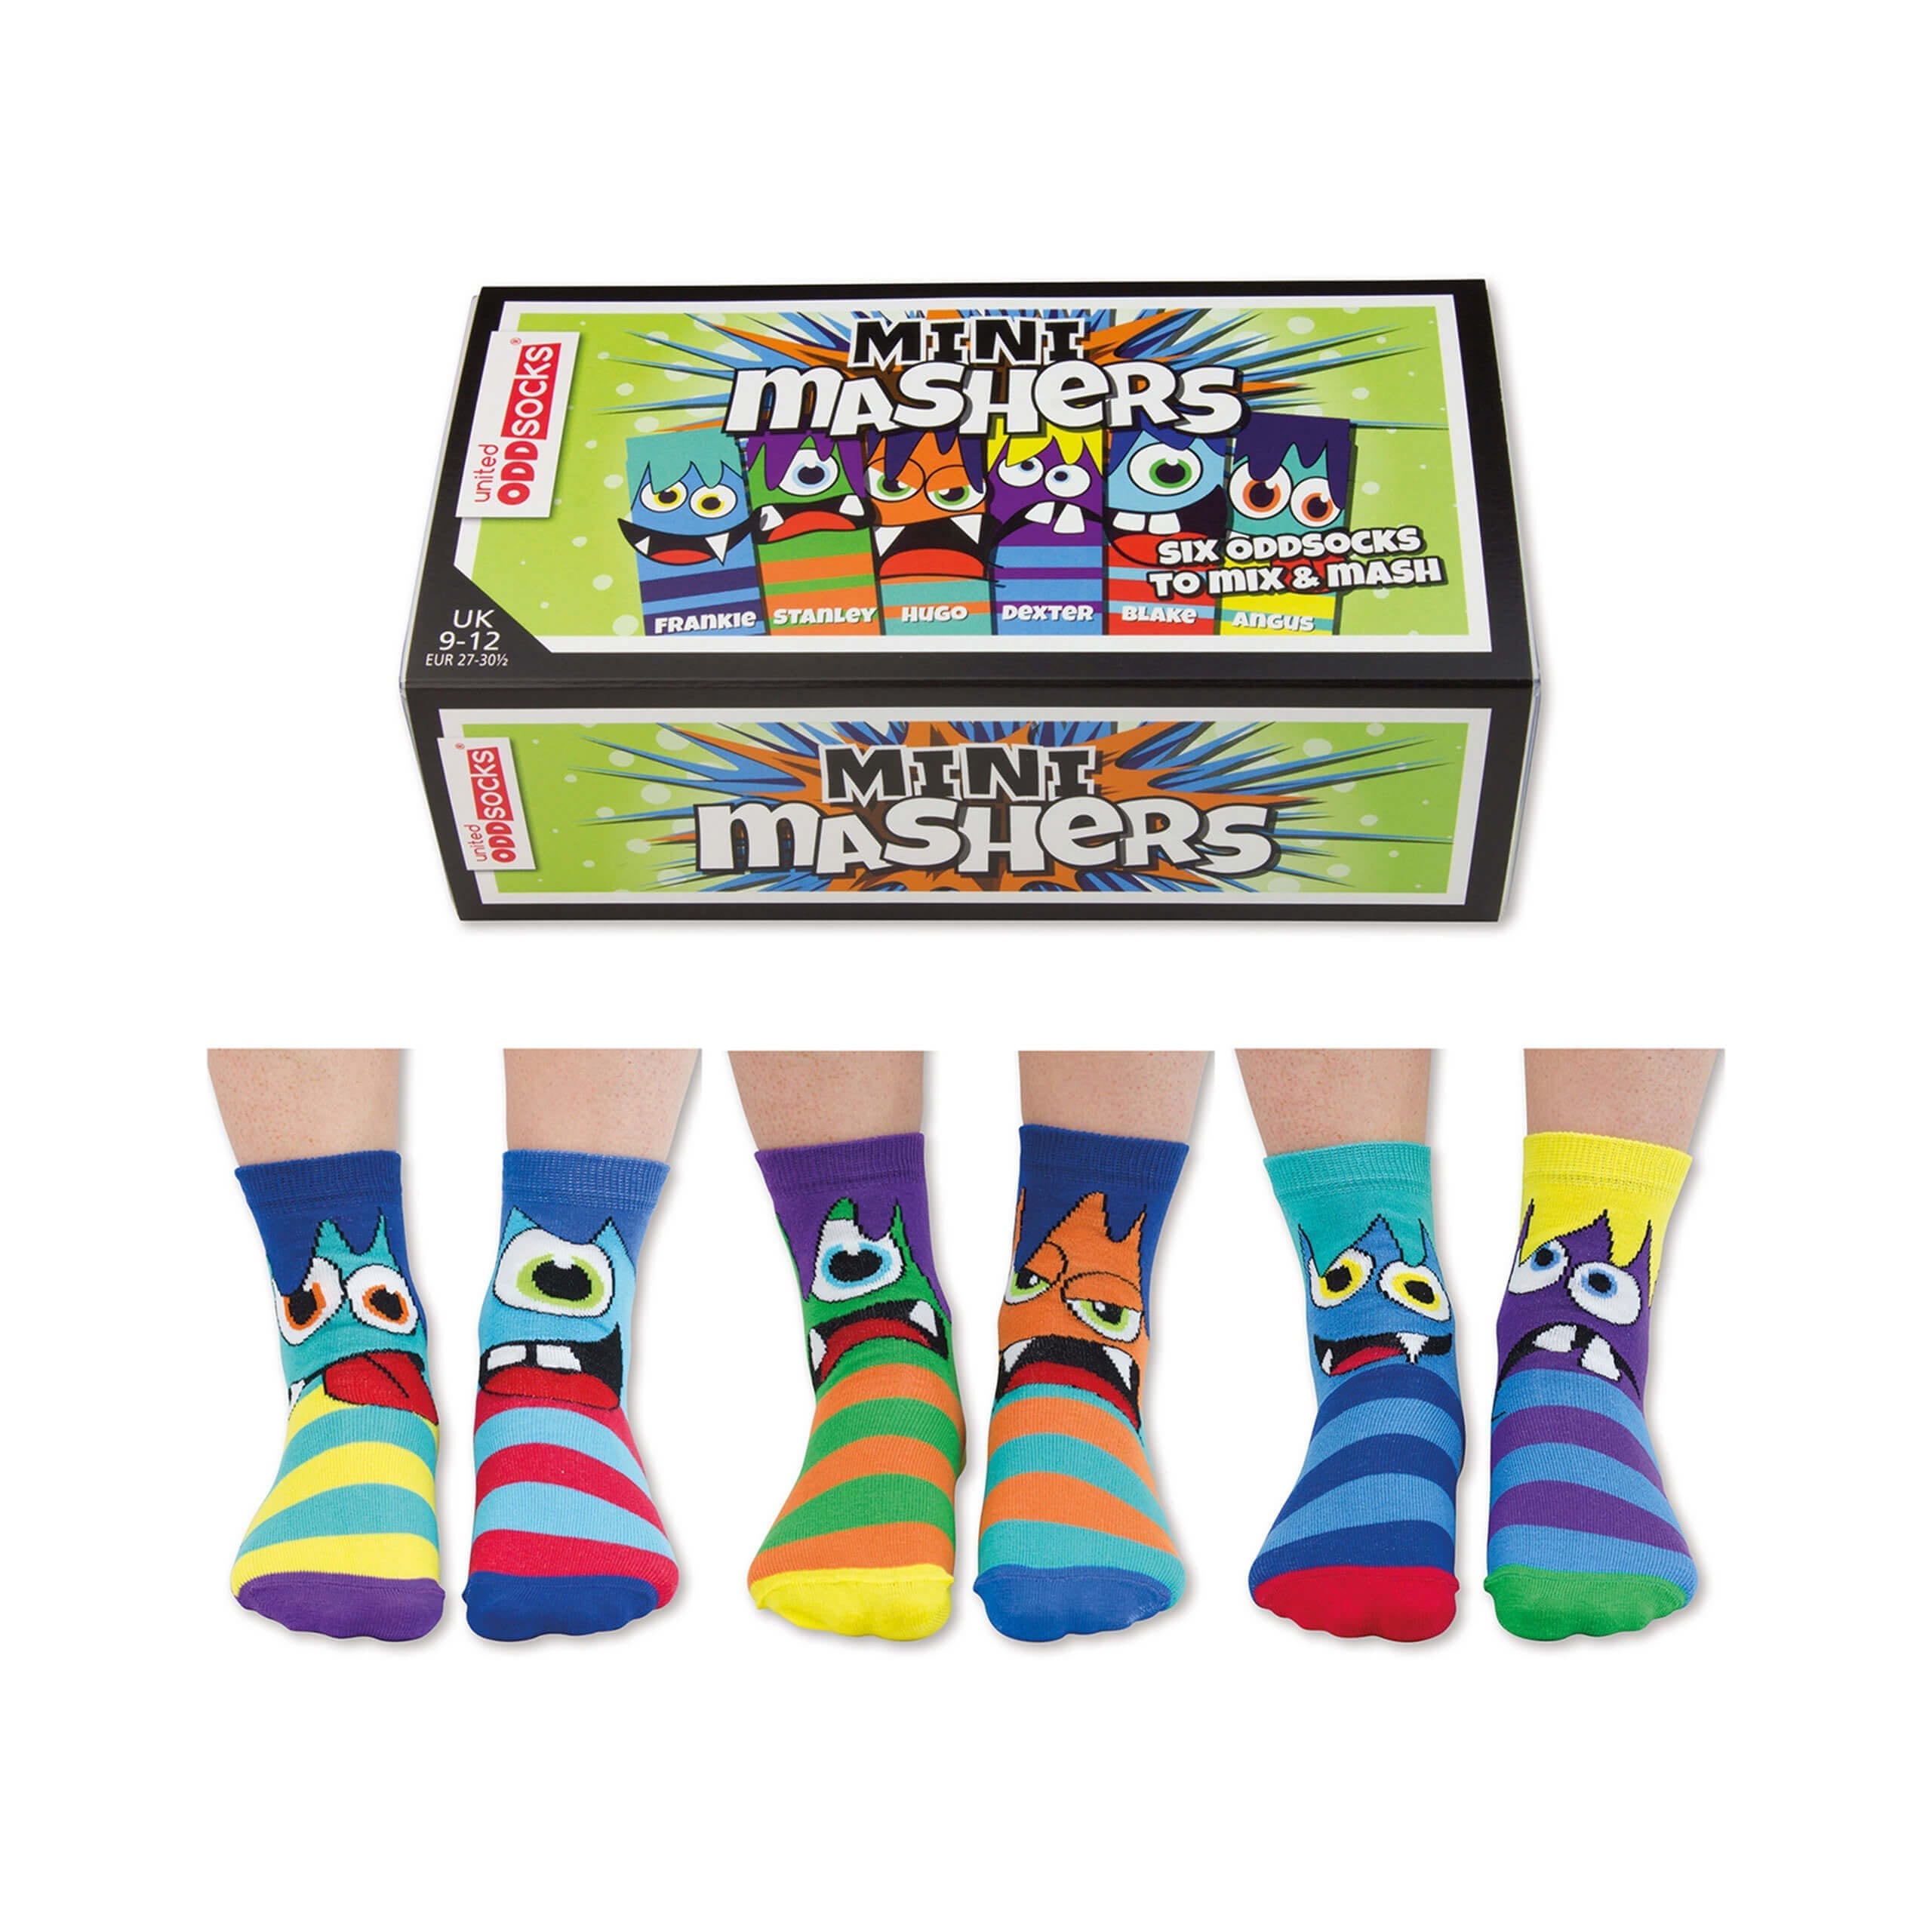 United Odd Socks Mini Mashers Socks Box